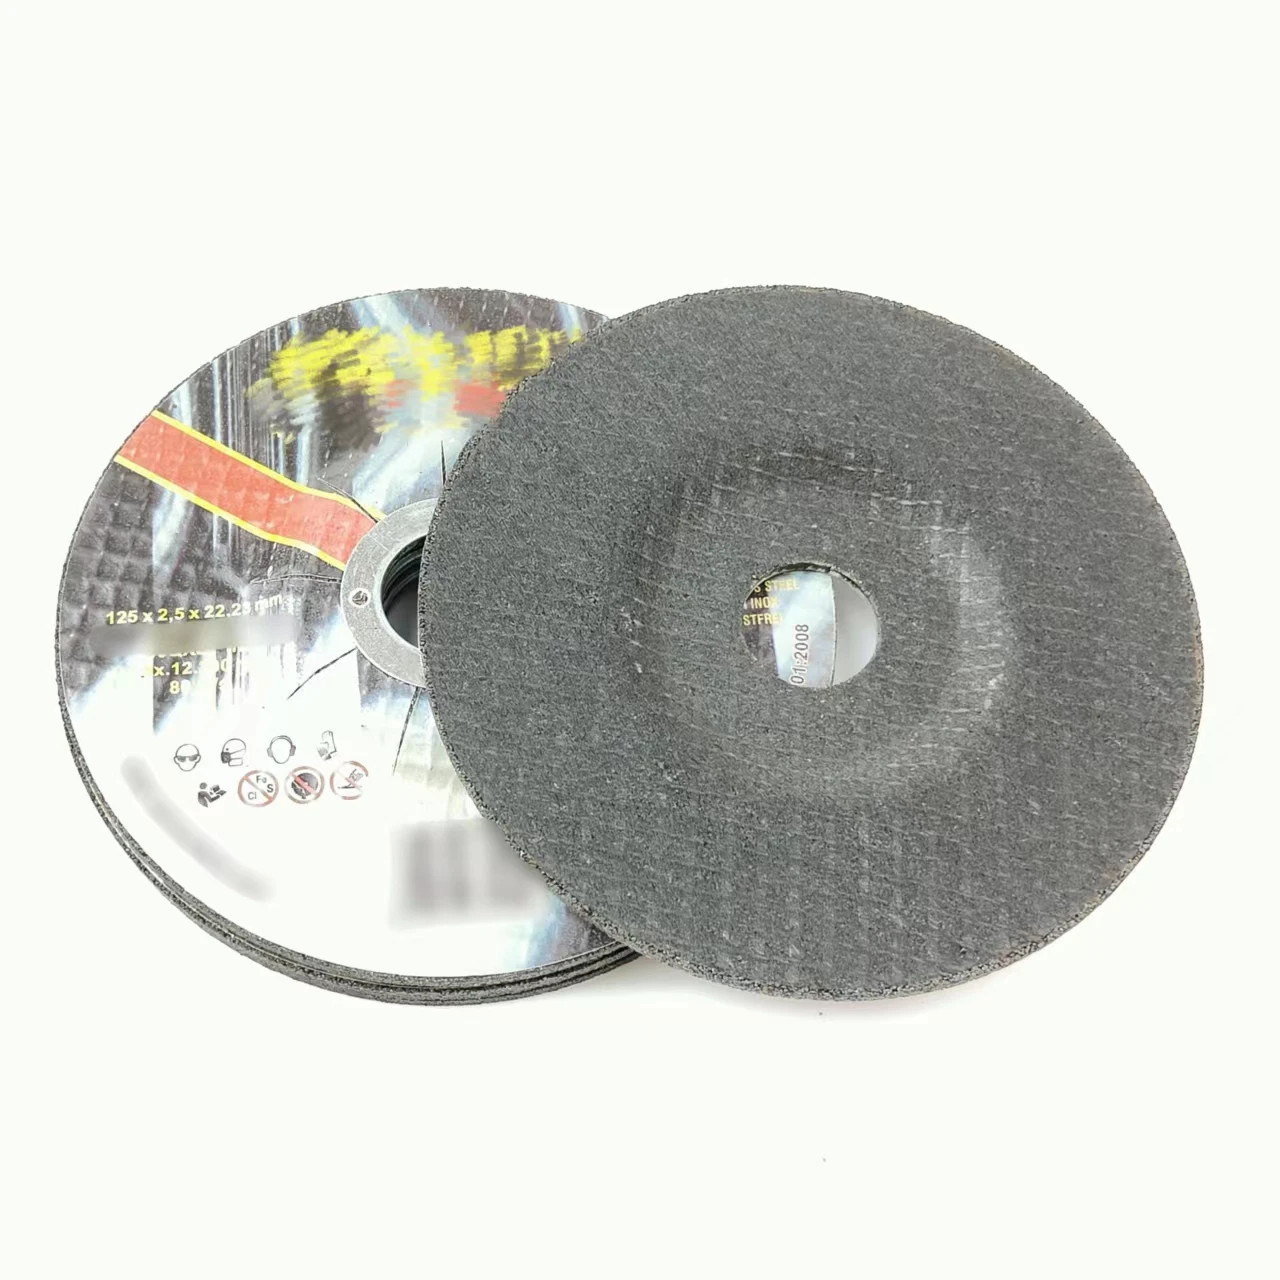 125mm Professional Tile Cutting Disk Wet Cutting Diamond Circular Saw Blade for Ceramic Porcelain Tile